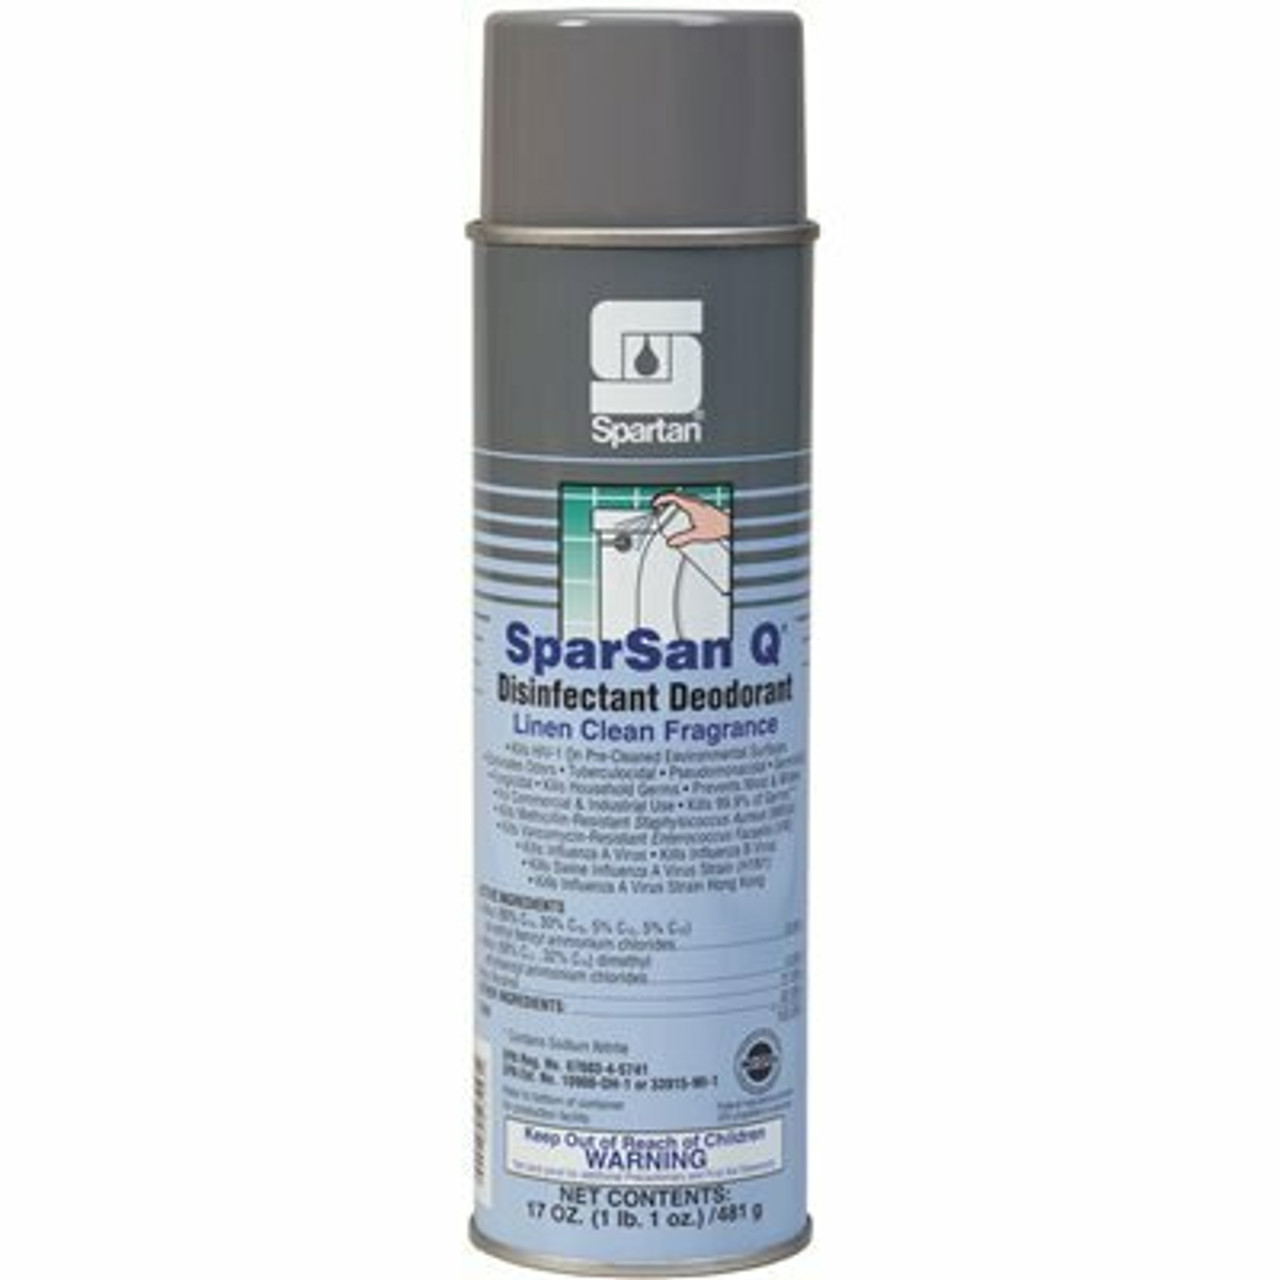 Spartan Chemical Company Sparsan Q 17Oz. Aerosol Can Linen Clean Scent Disinfectant Deodorant